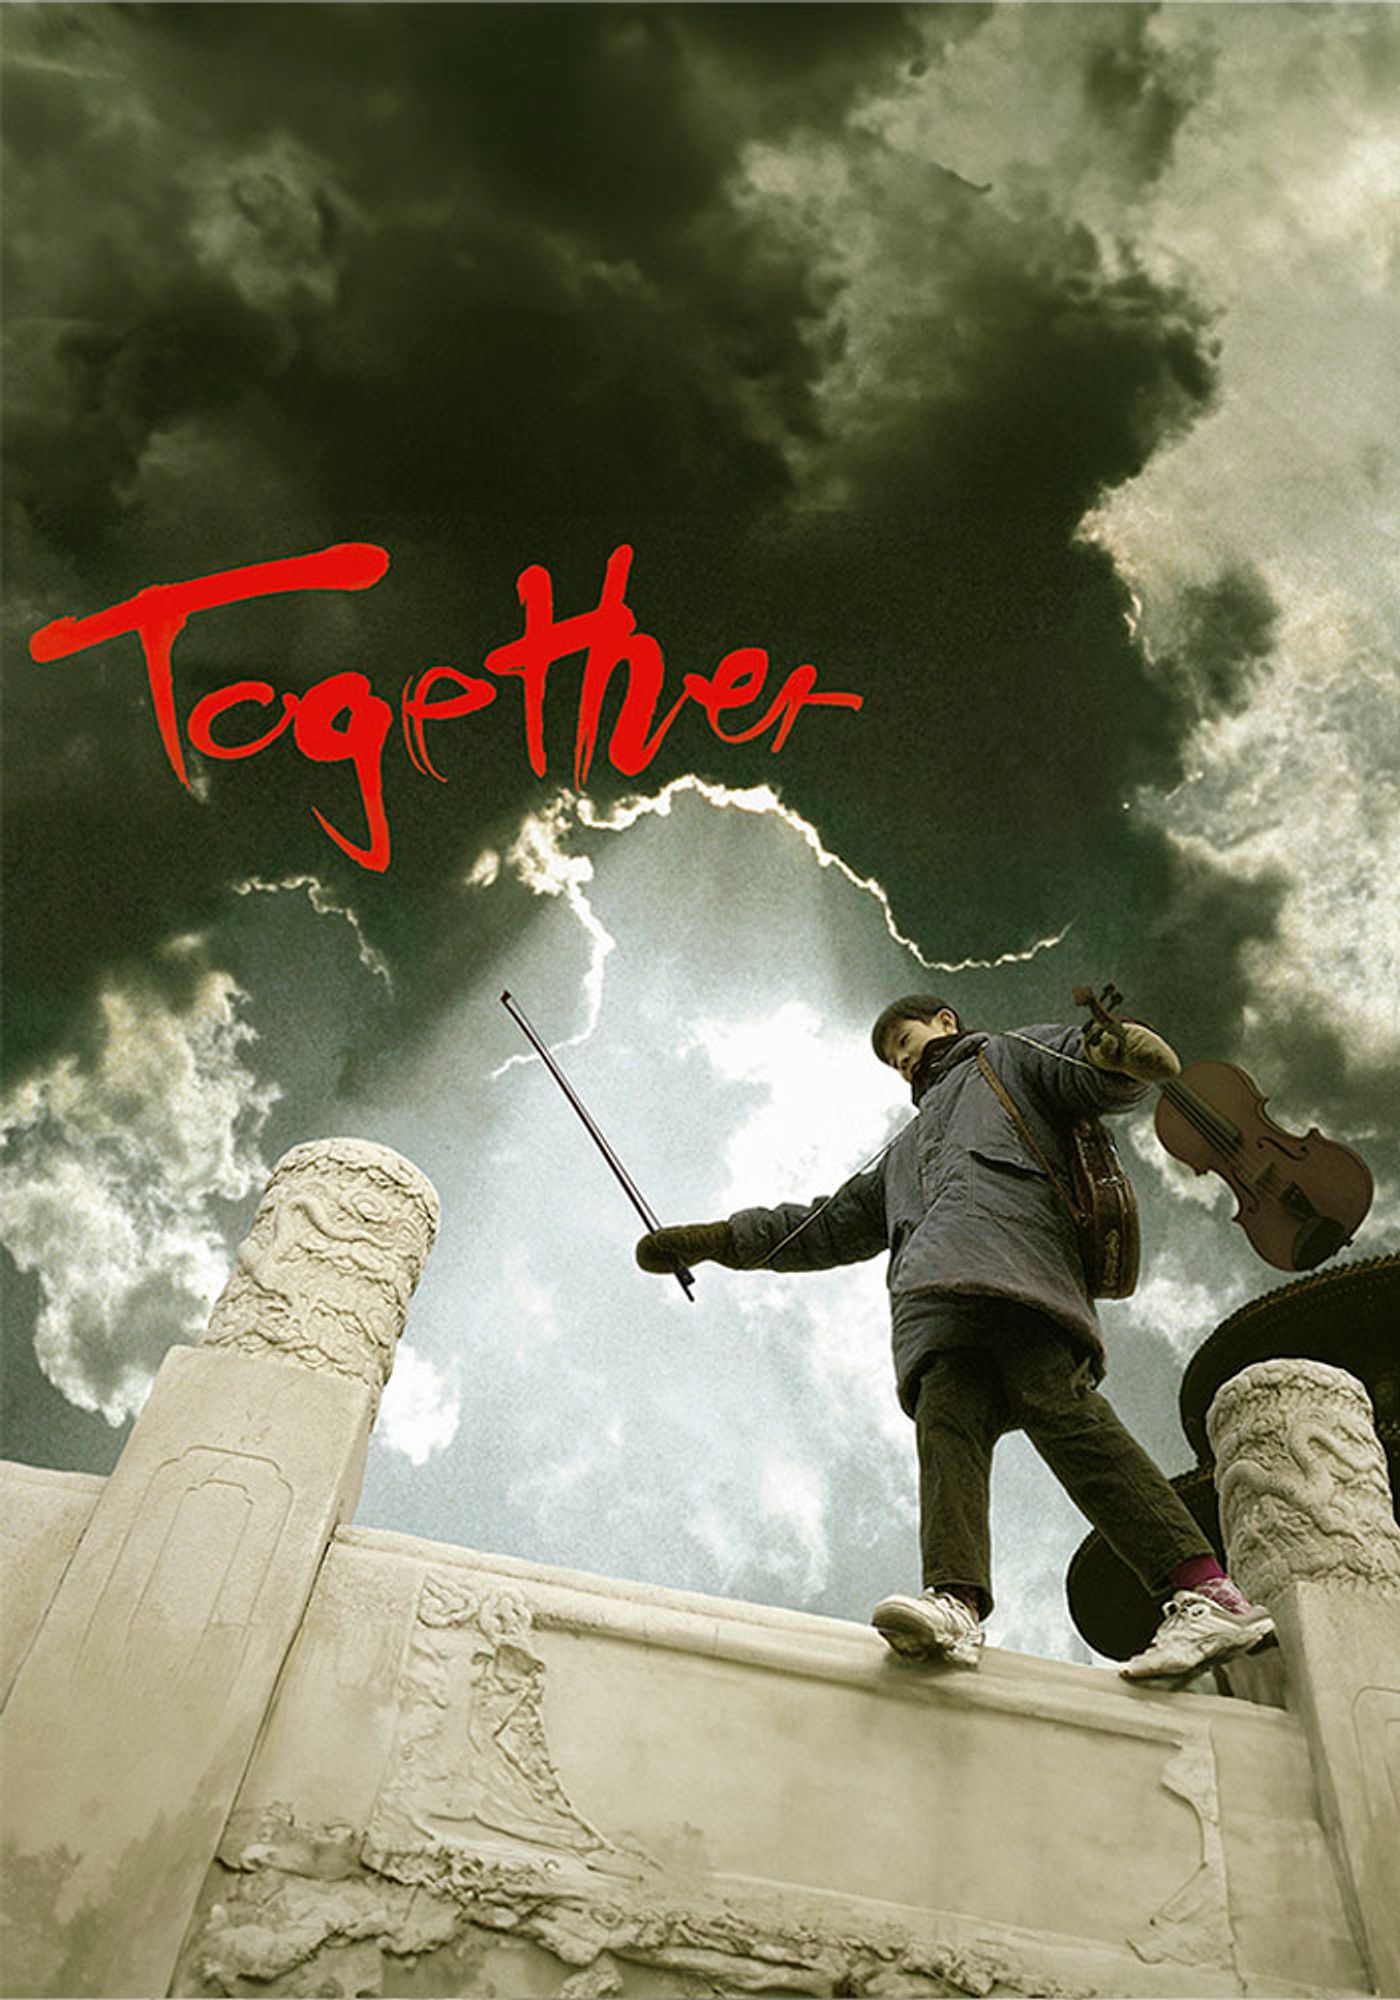 Together (Juntos)